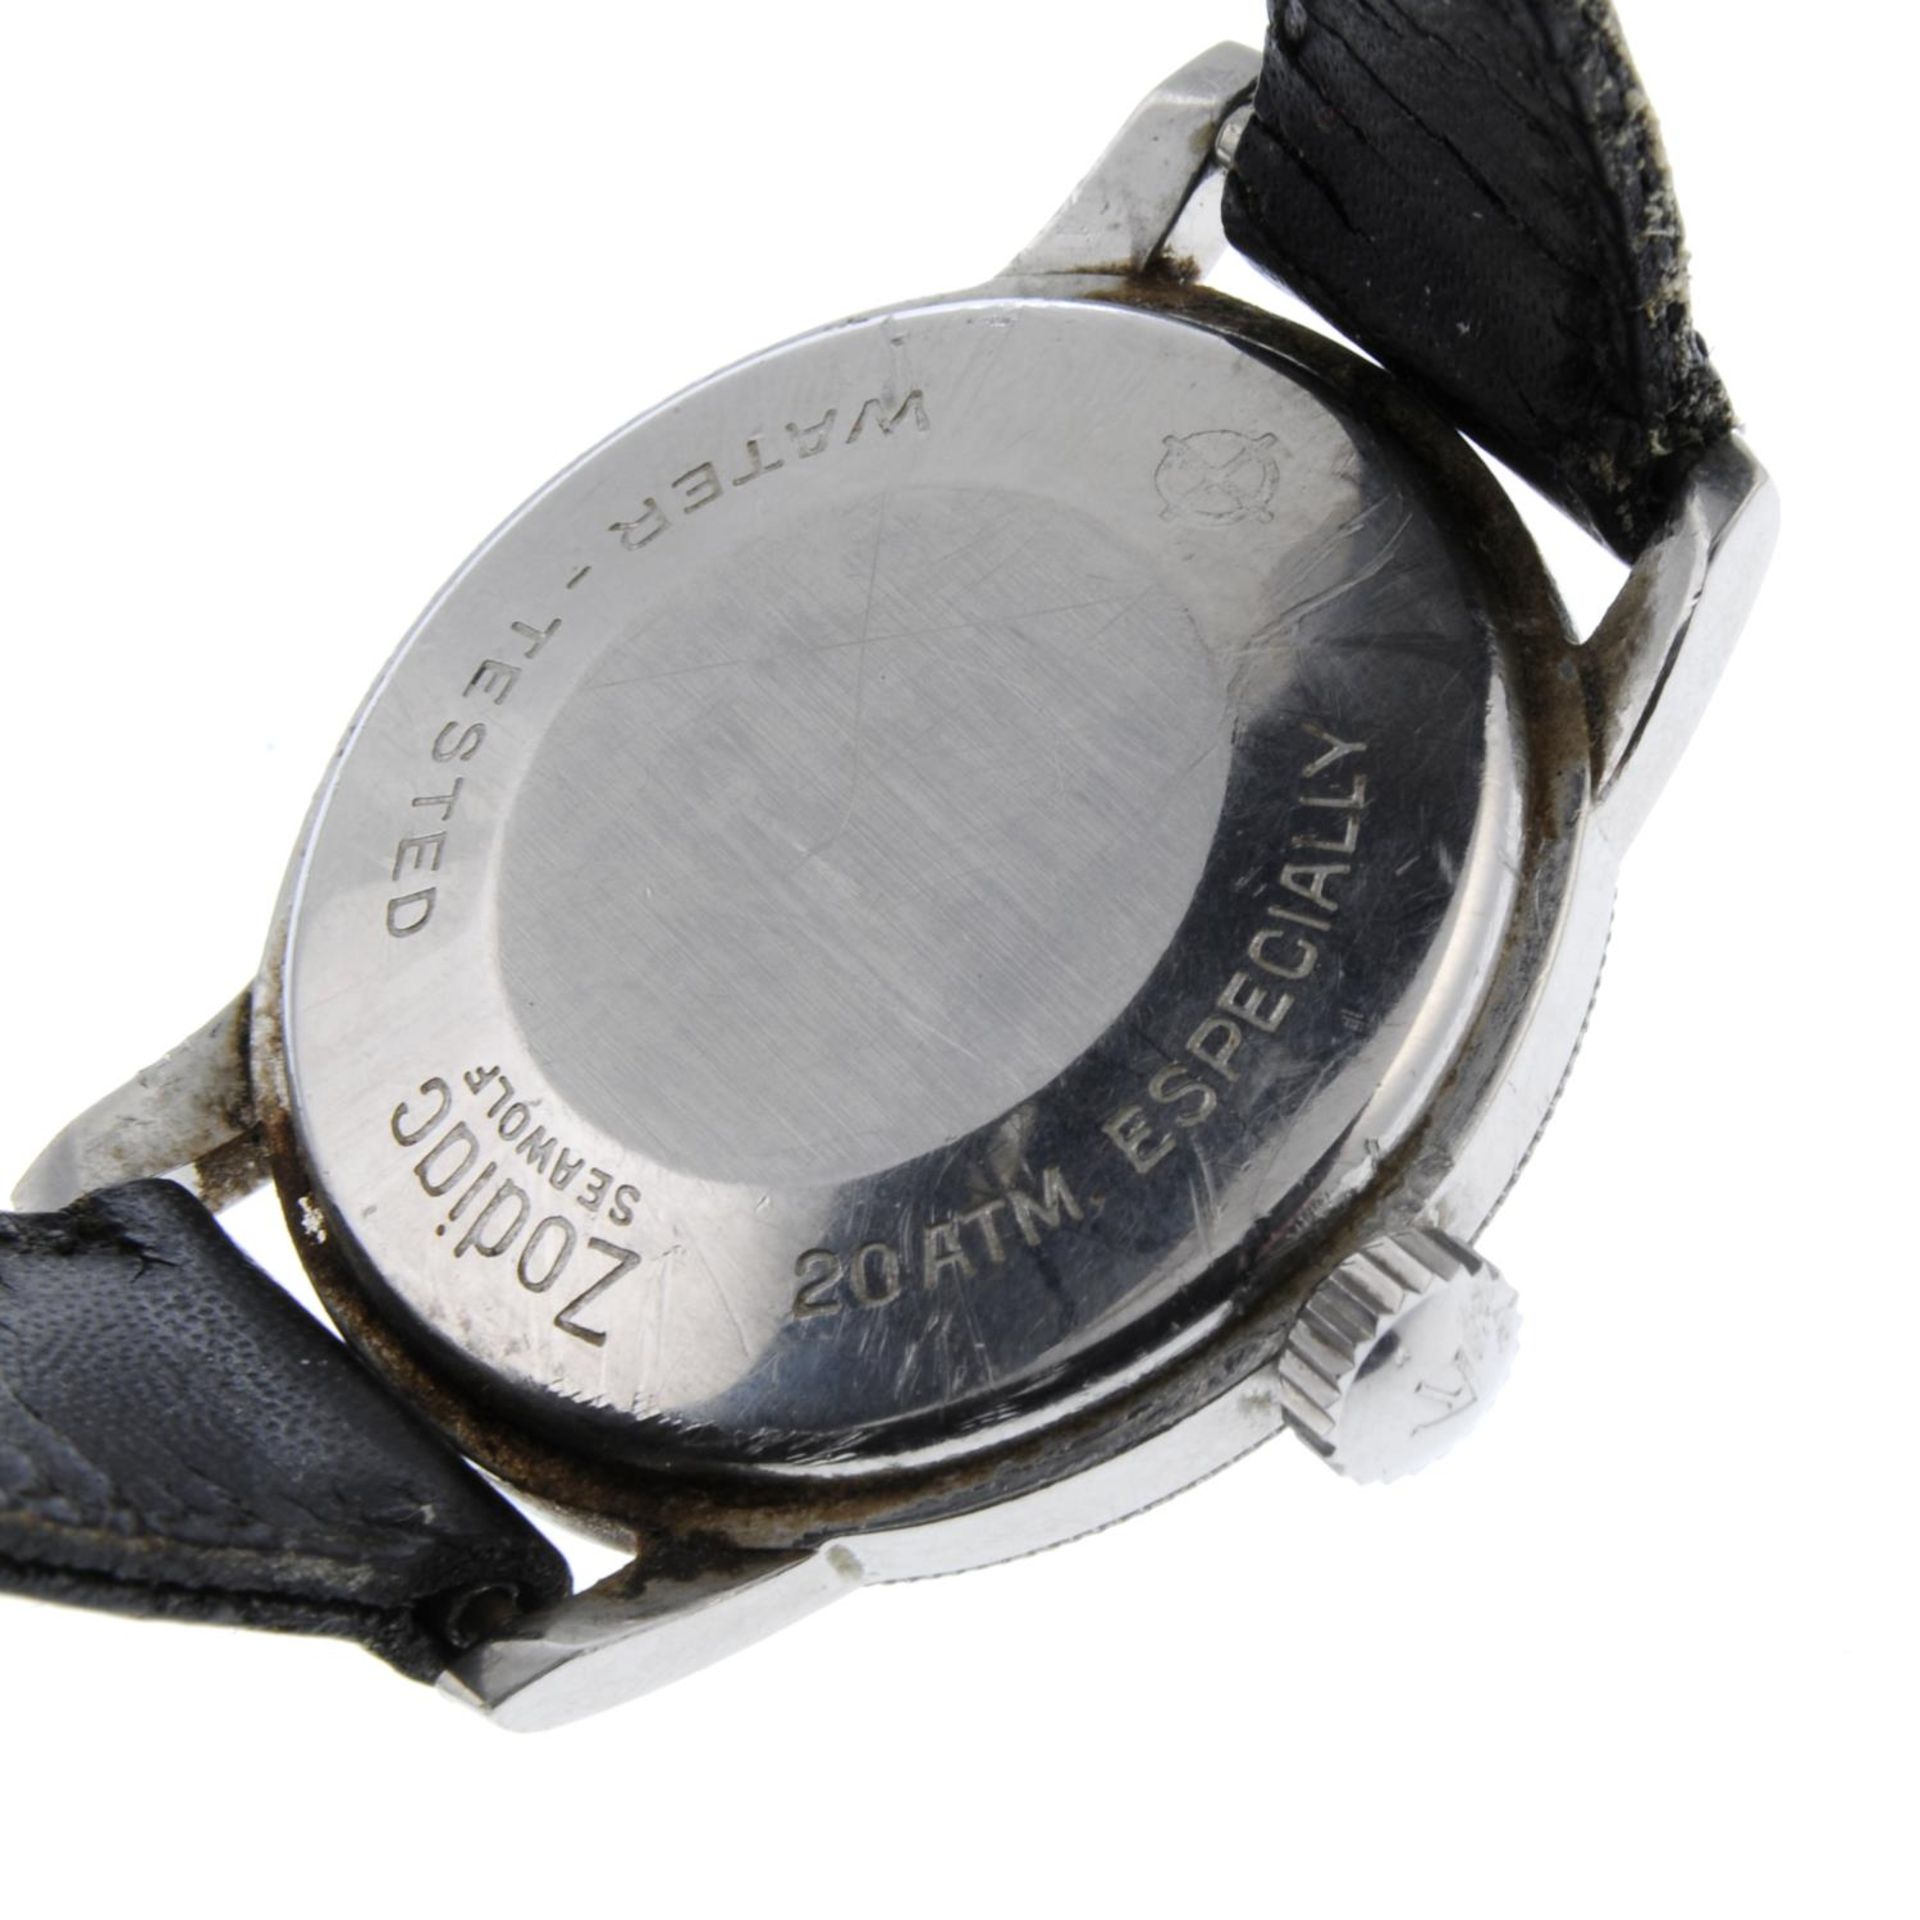 ZODIAC - a gentleman's Sea Wolf wrist watch. - Image 2 of 4